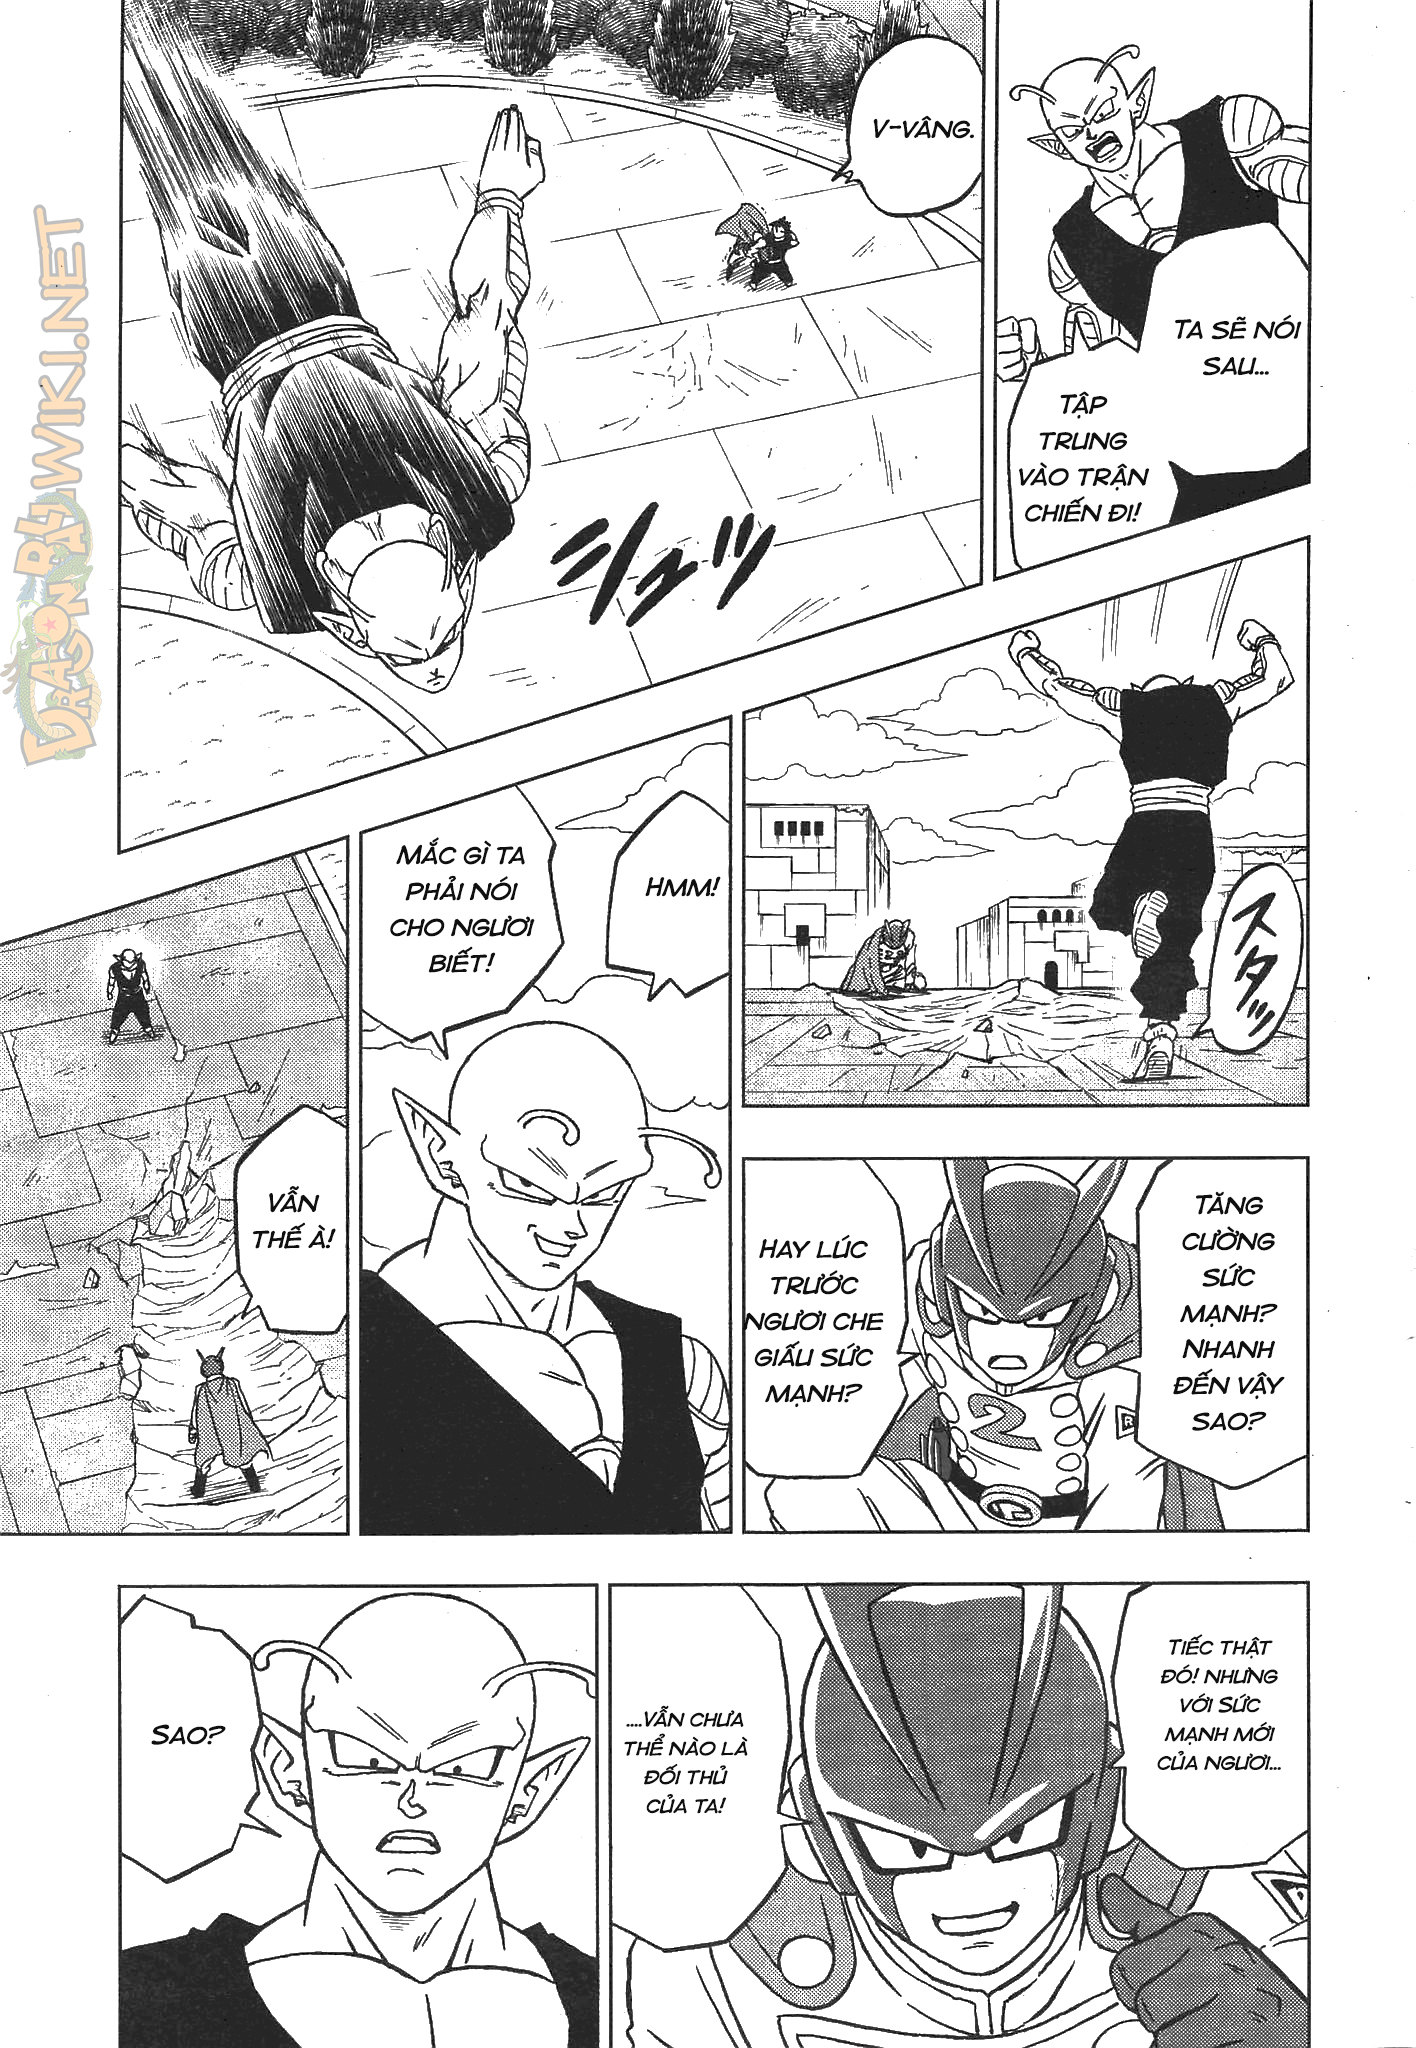 Trang 19 - Dragon Ball Super 51